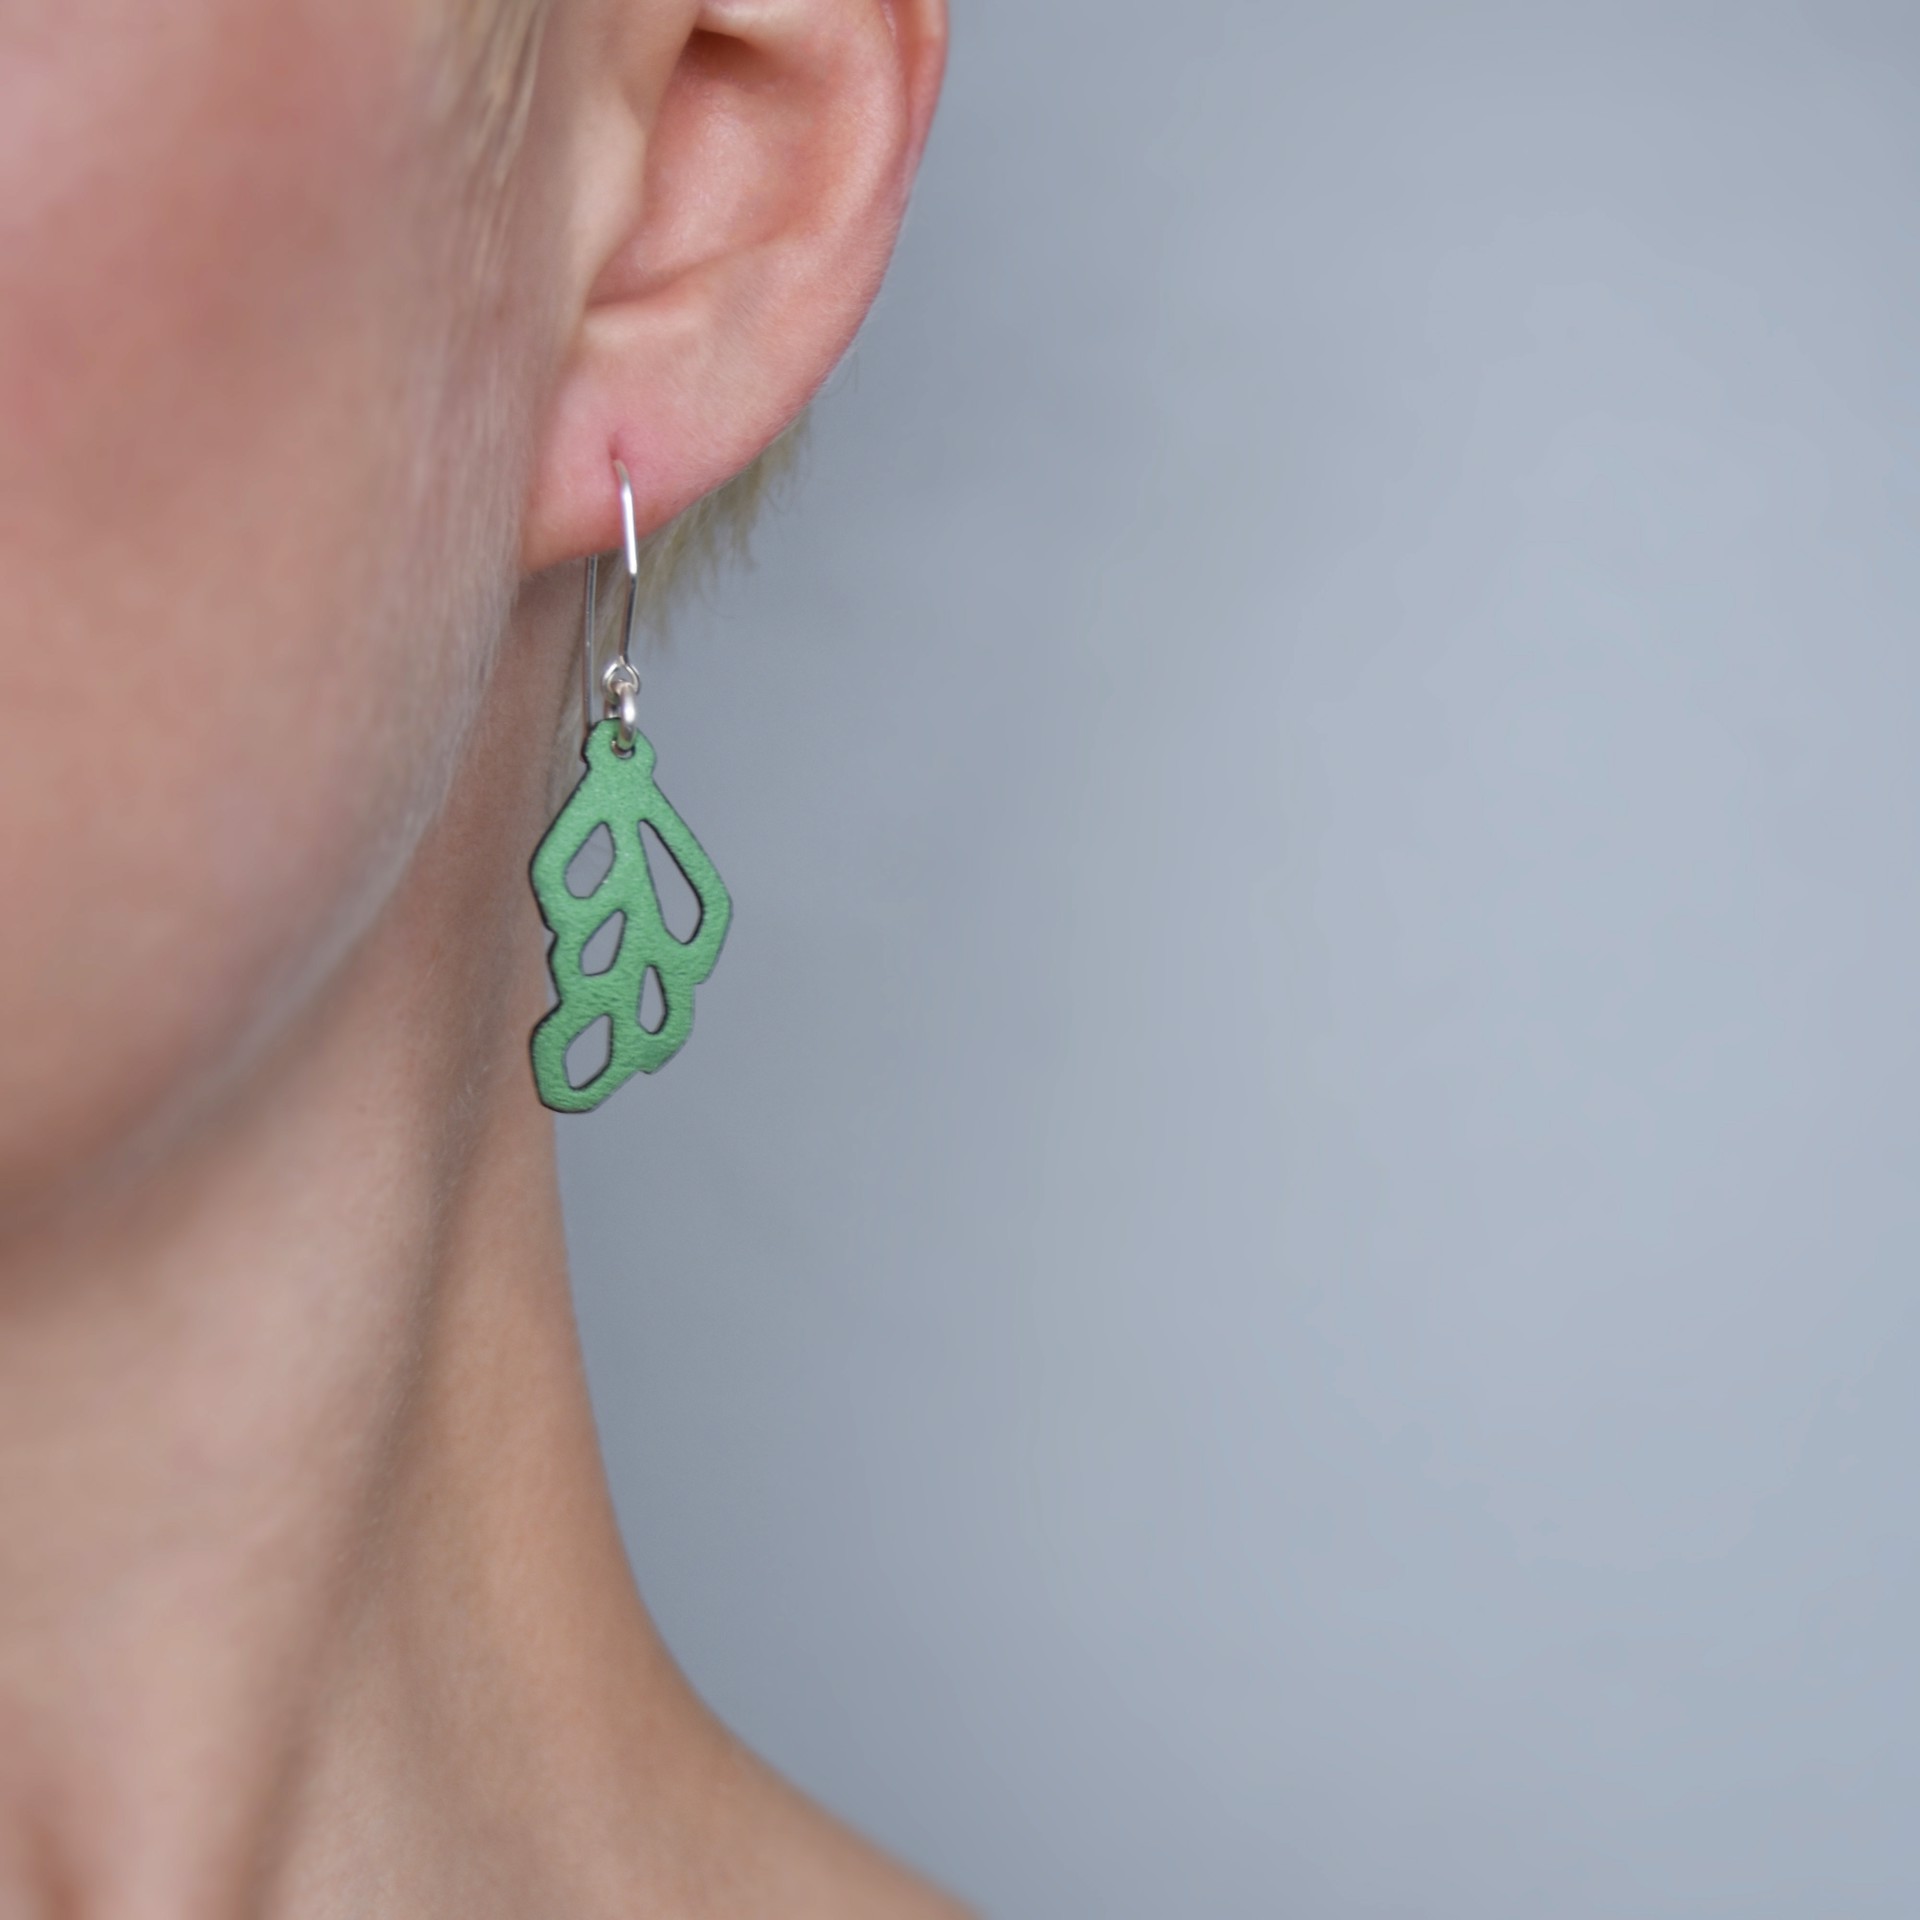 Small Magnolia Earrings by Joanna Nealey